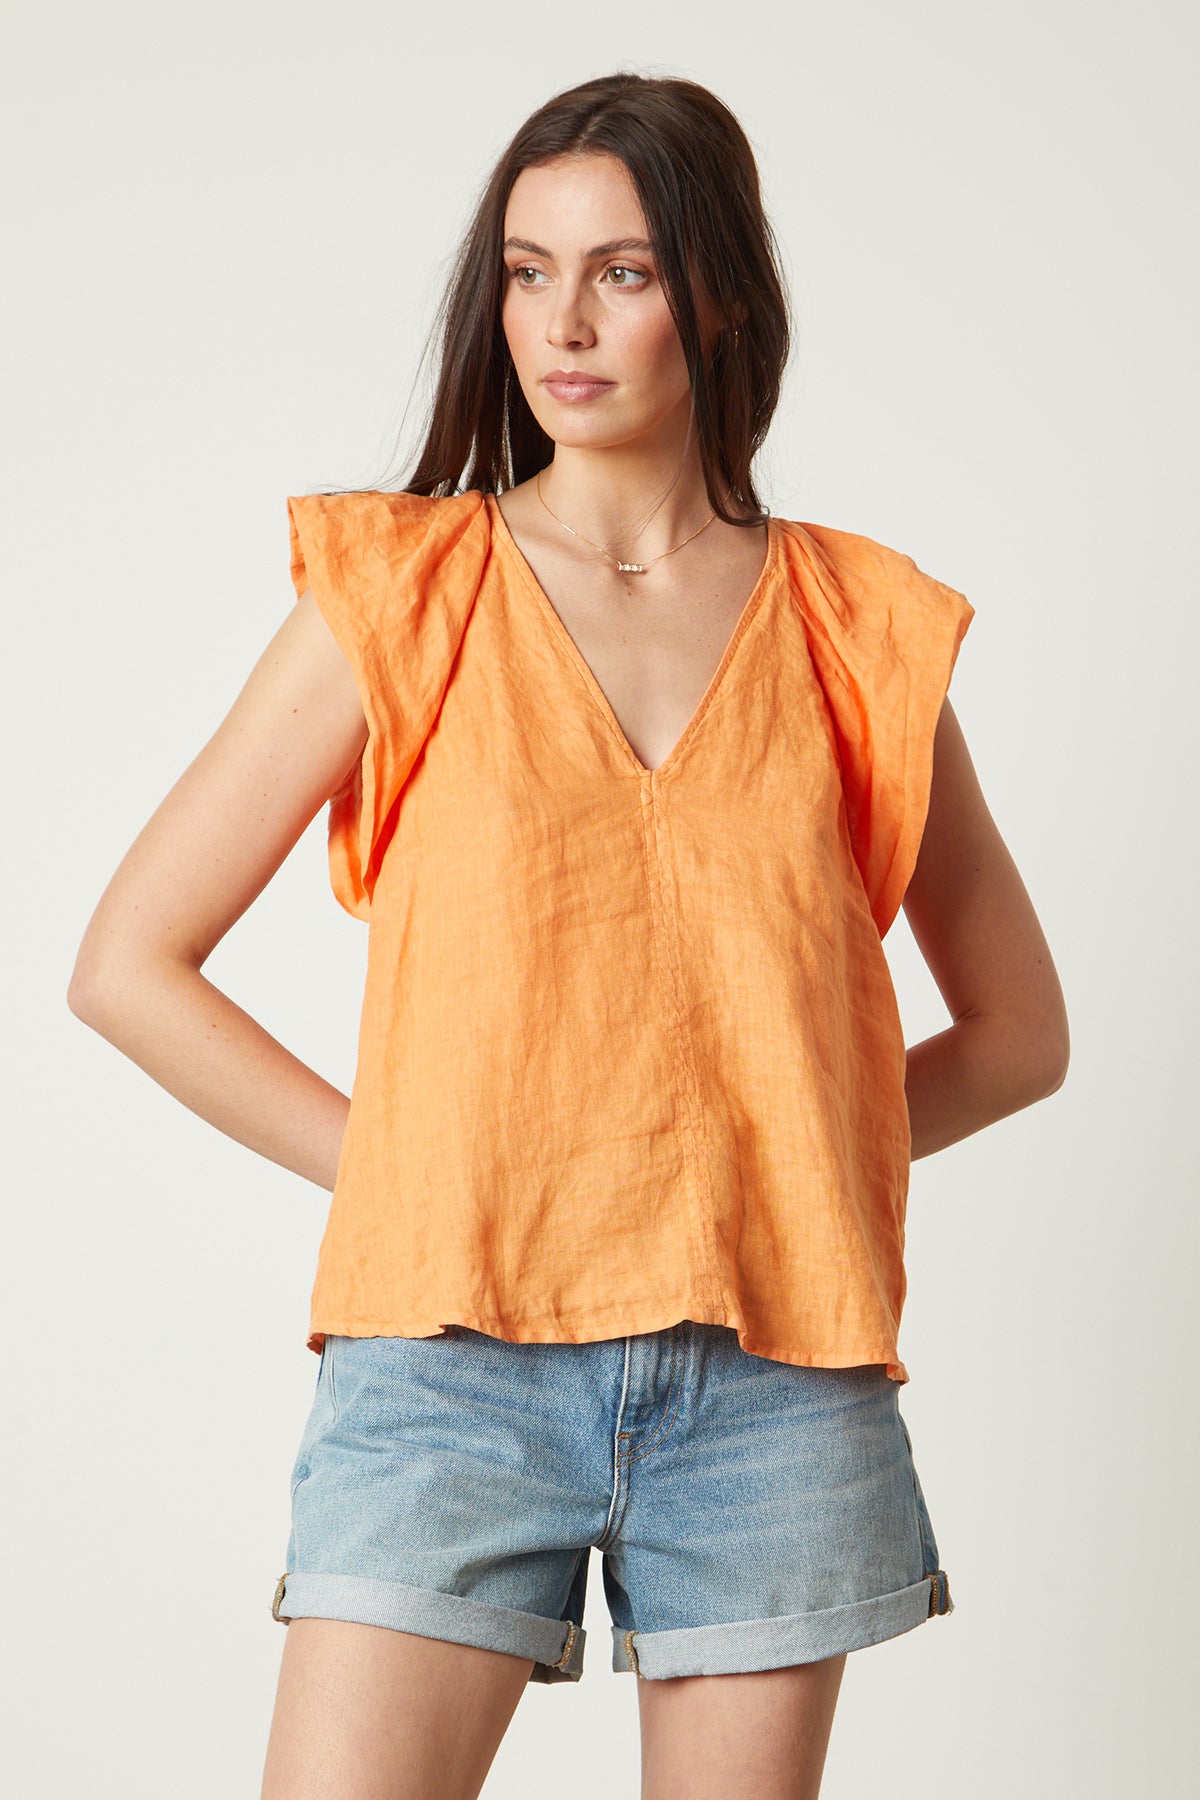   Ava Linen V-Neck Top in orange heat color with blue denim shorts, necklace 